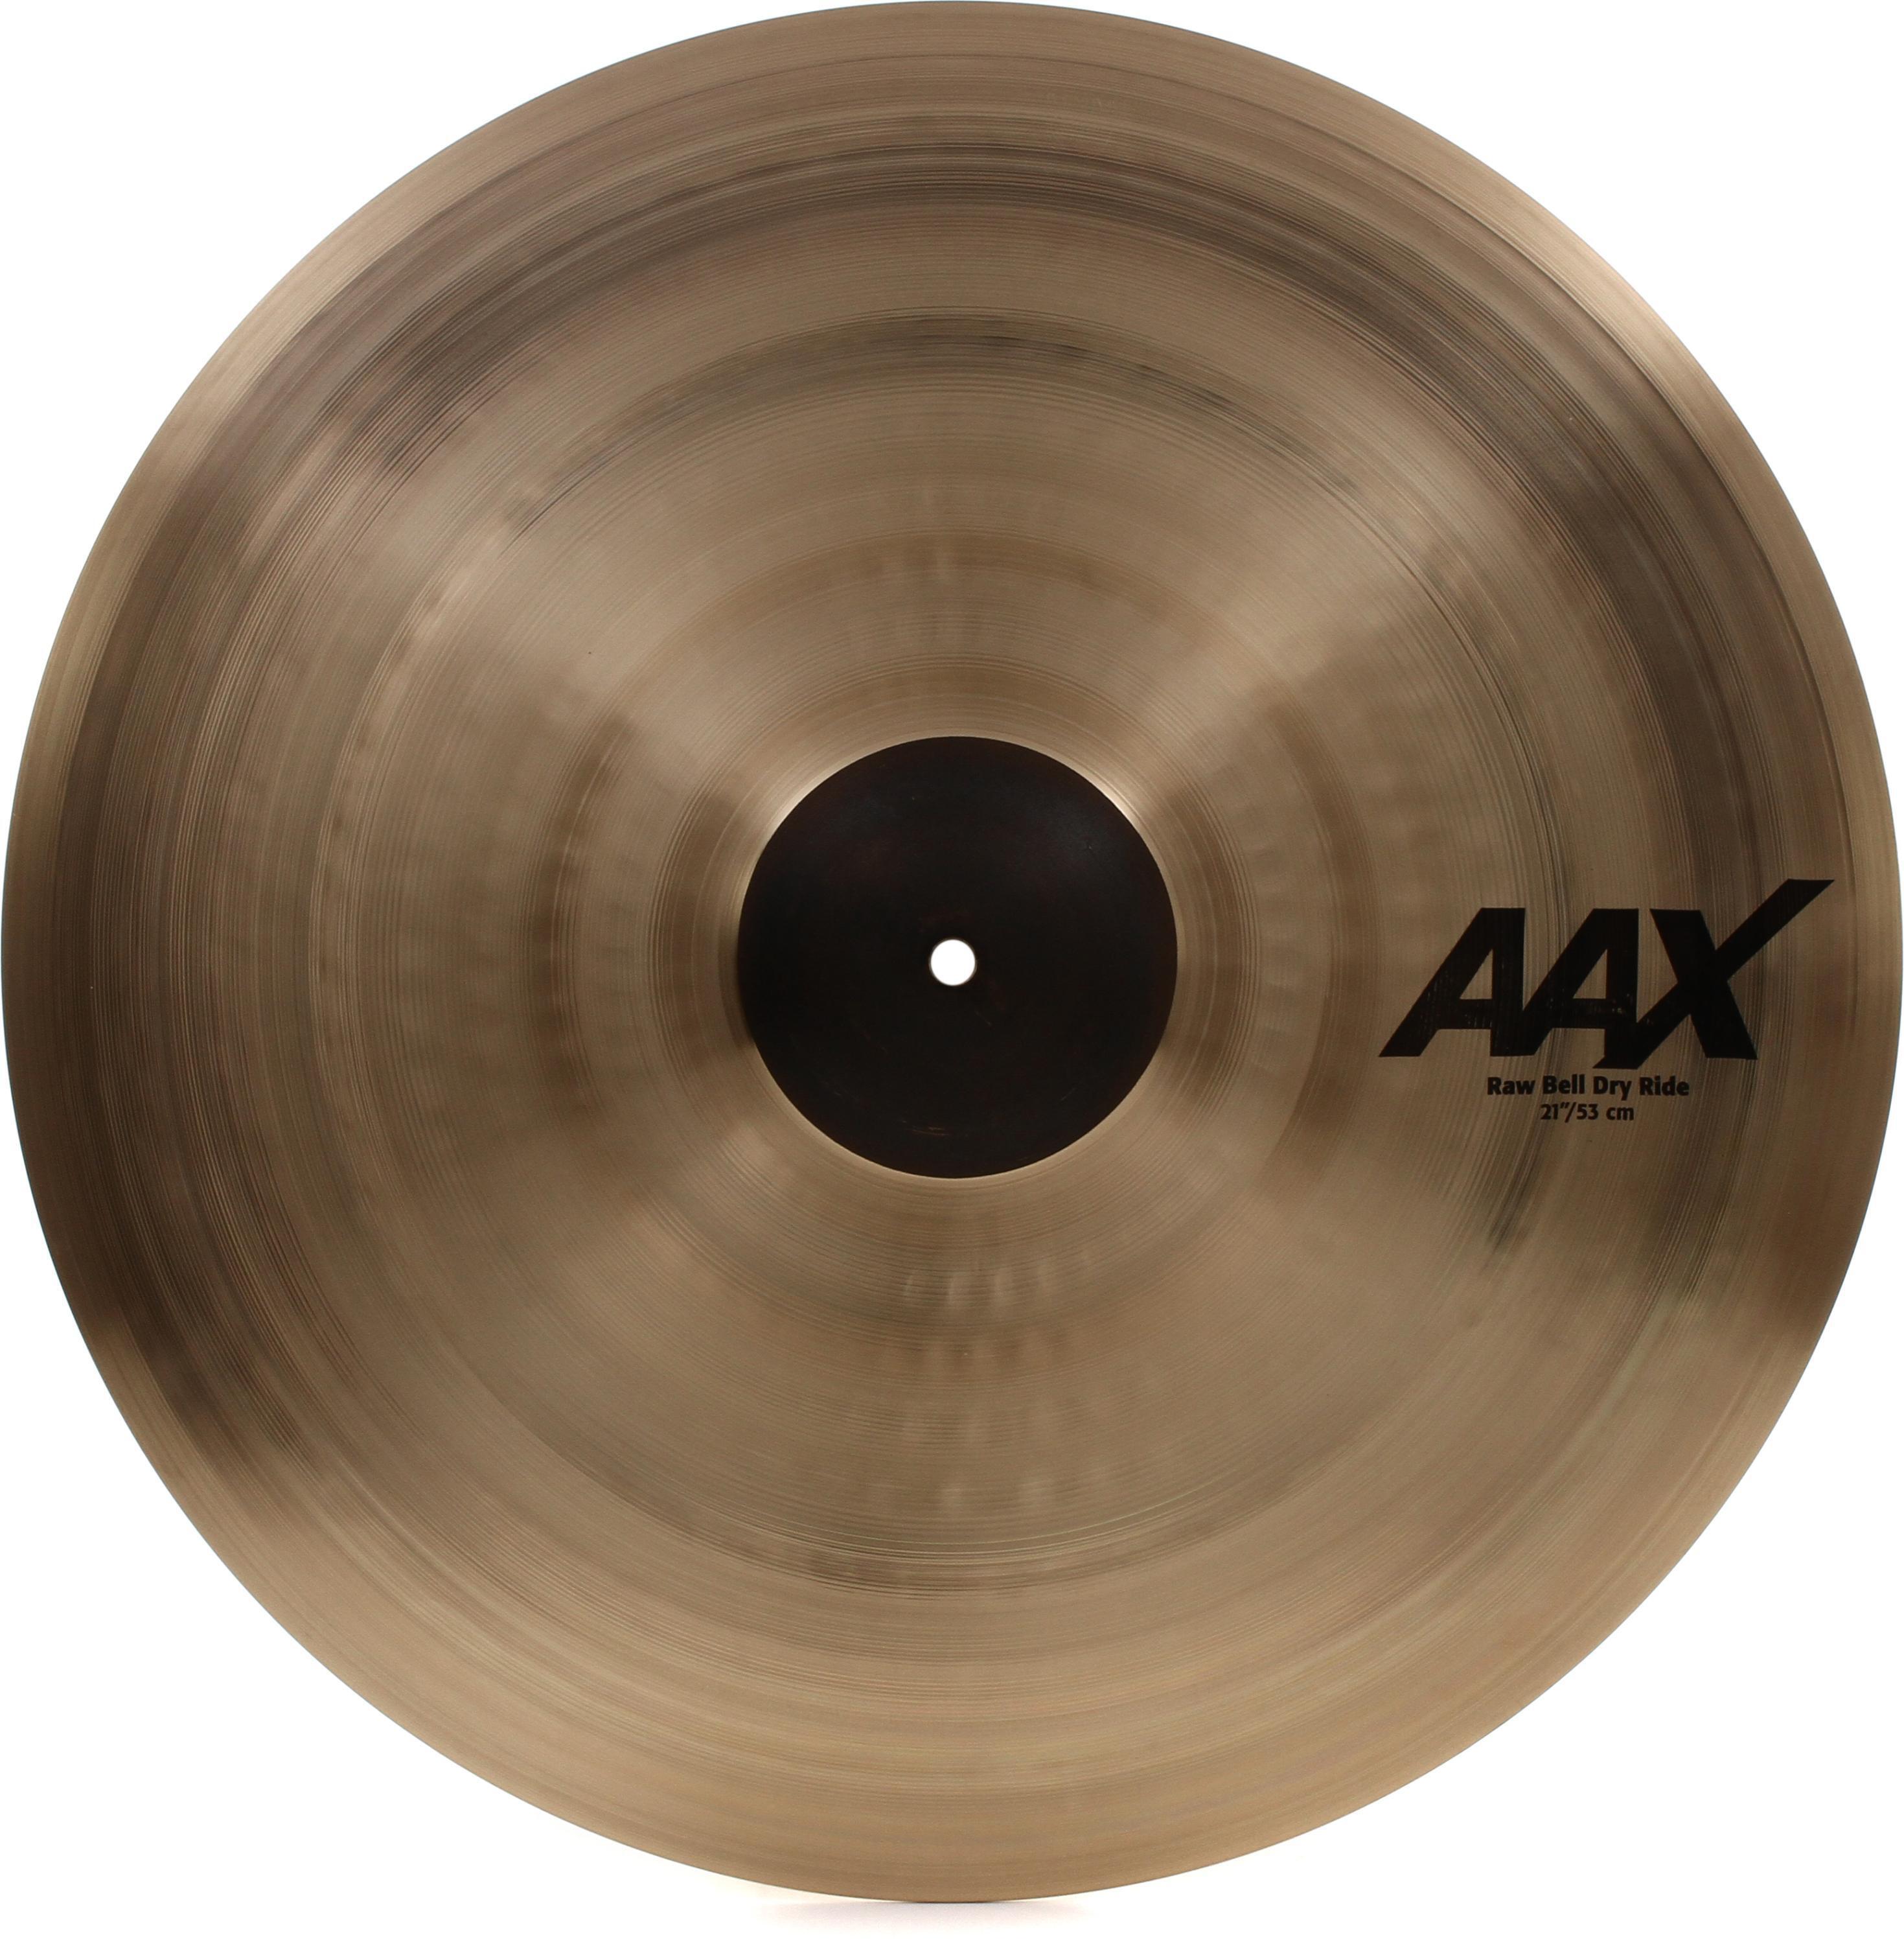 Sabian 21 inch AAX Raw Bell Dry Ride Cymbal